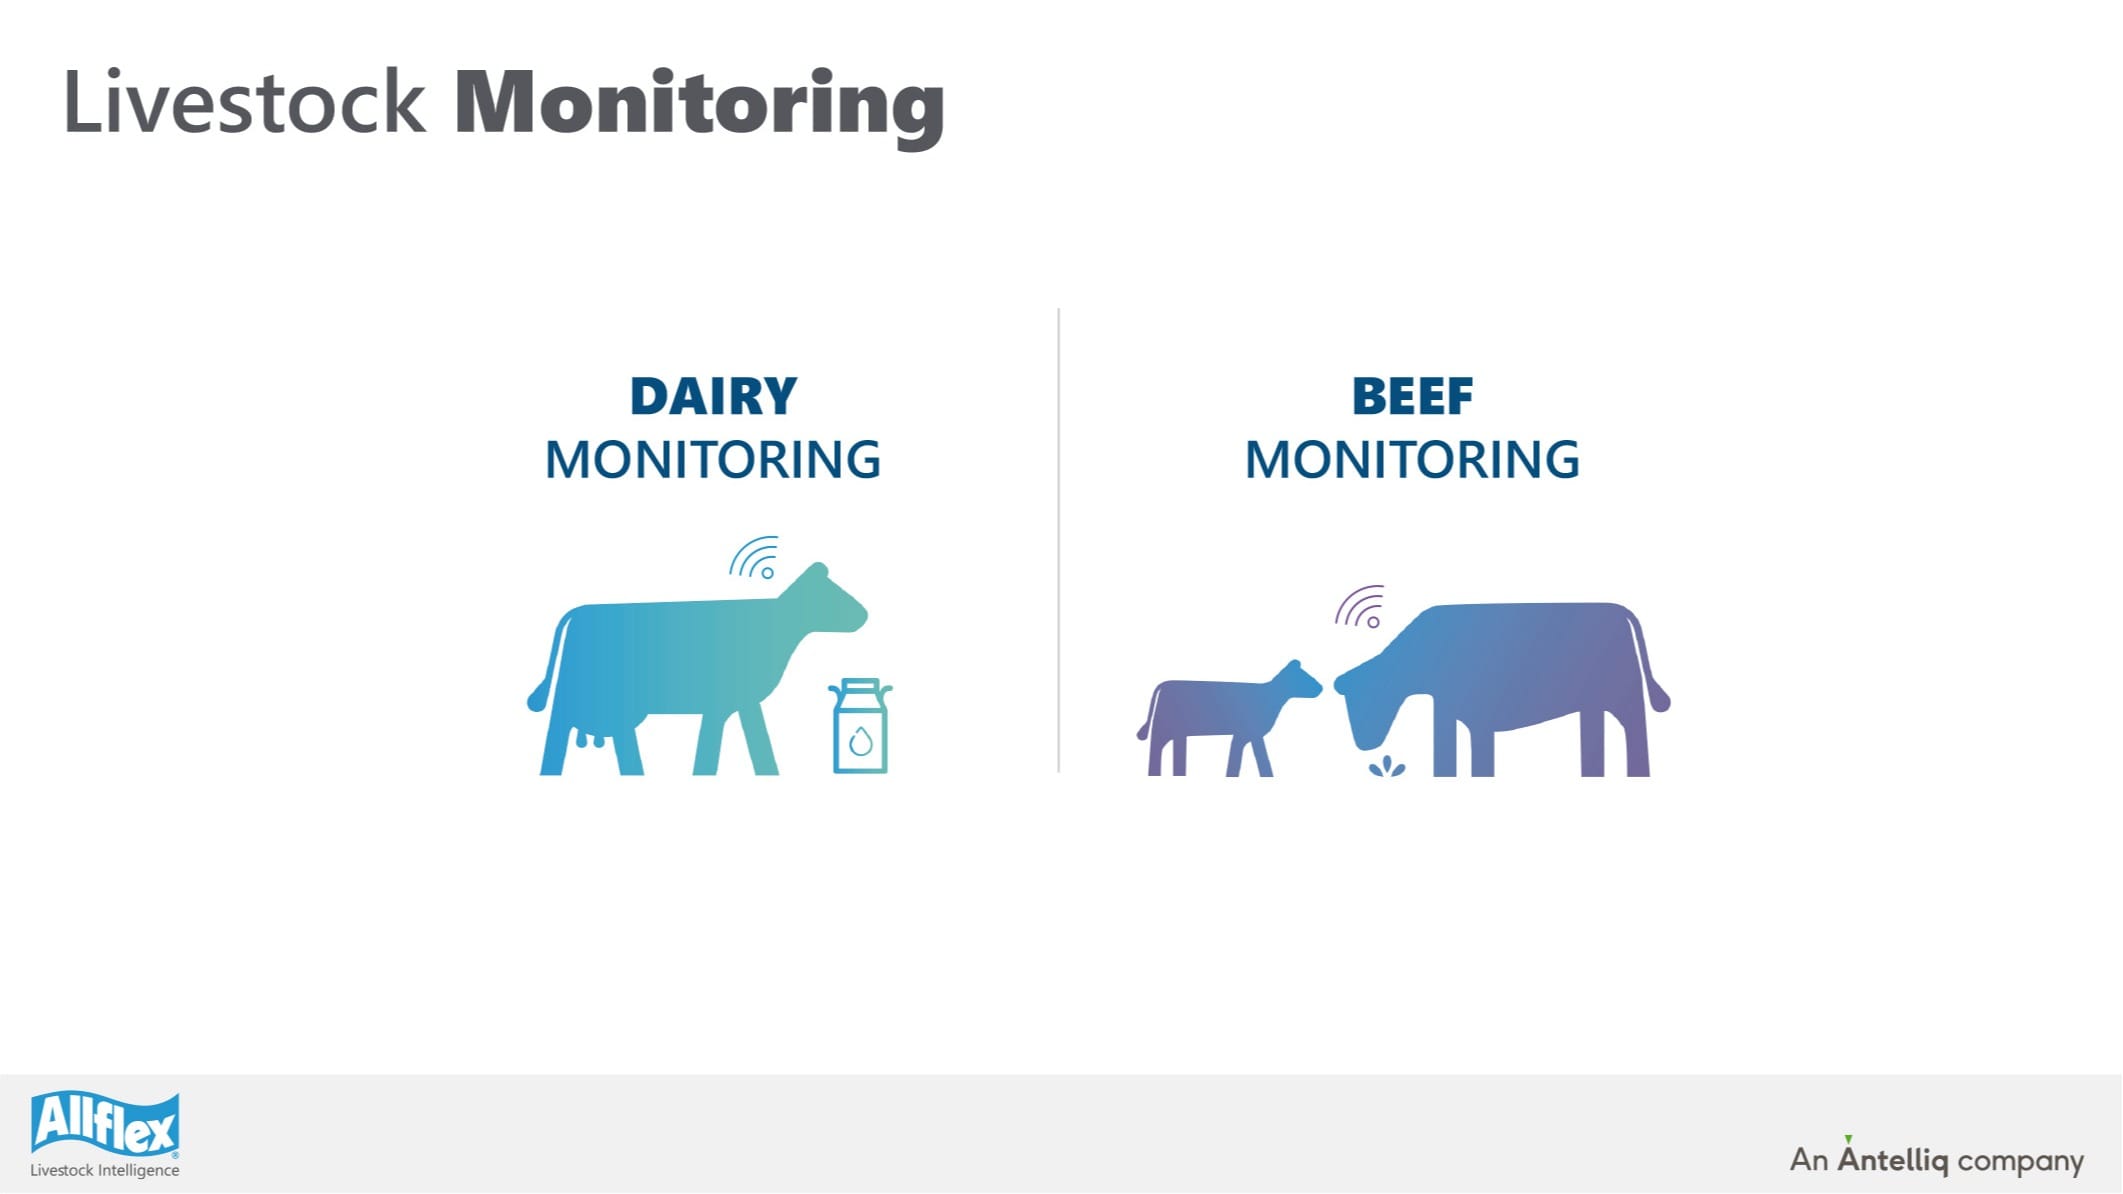 Livestock Monitoring